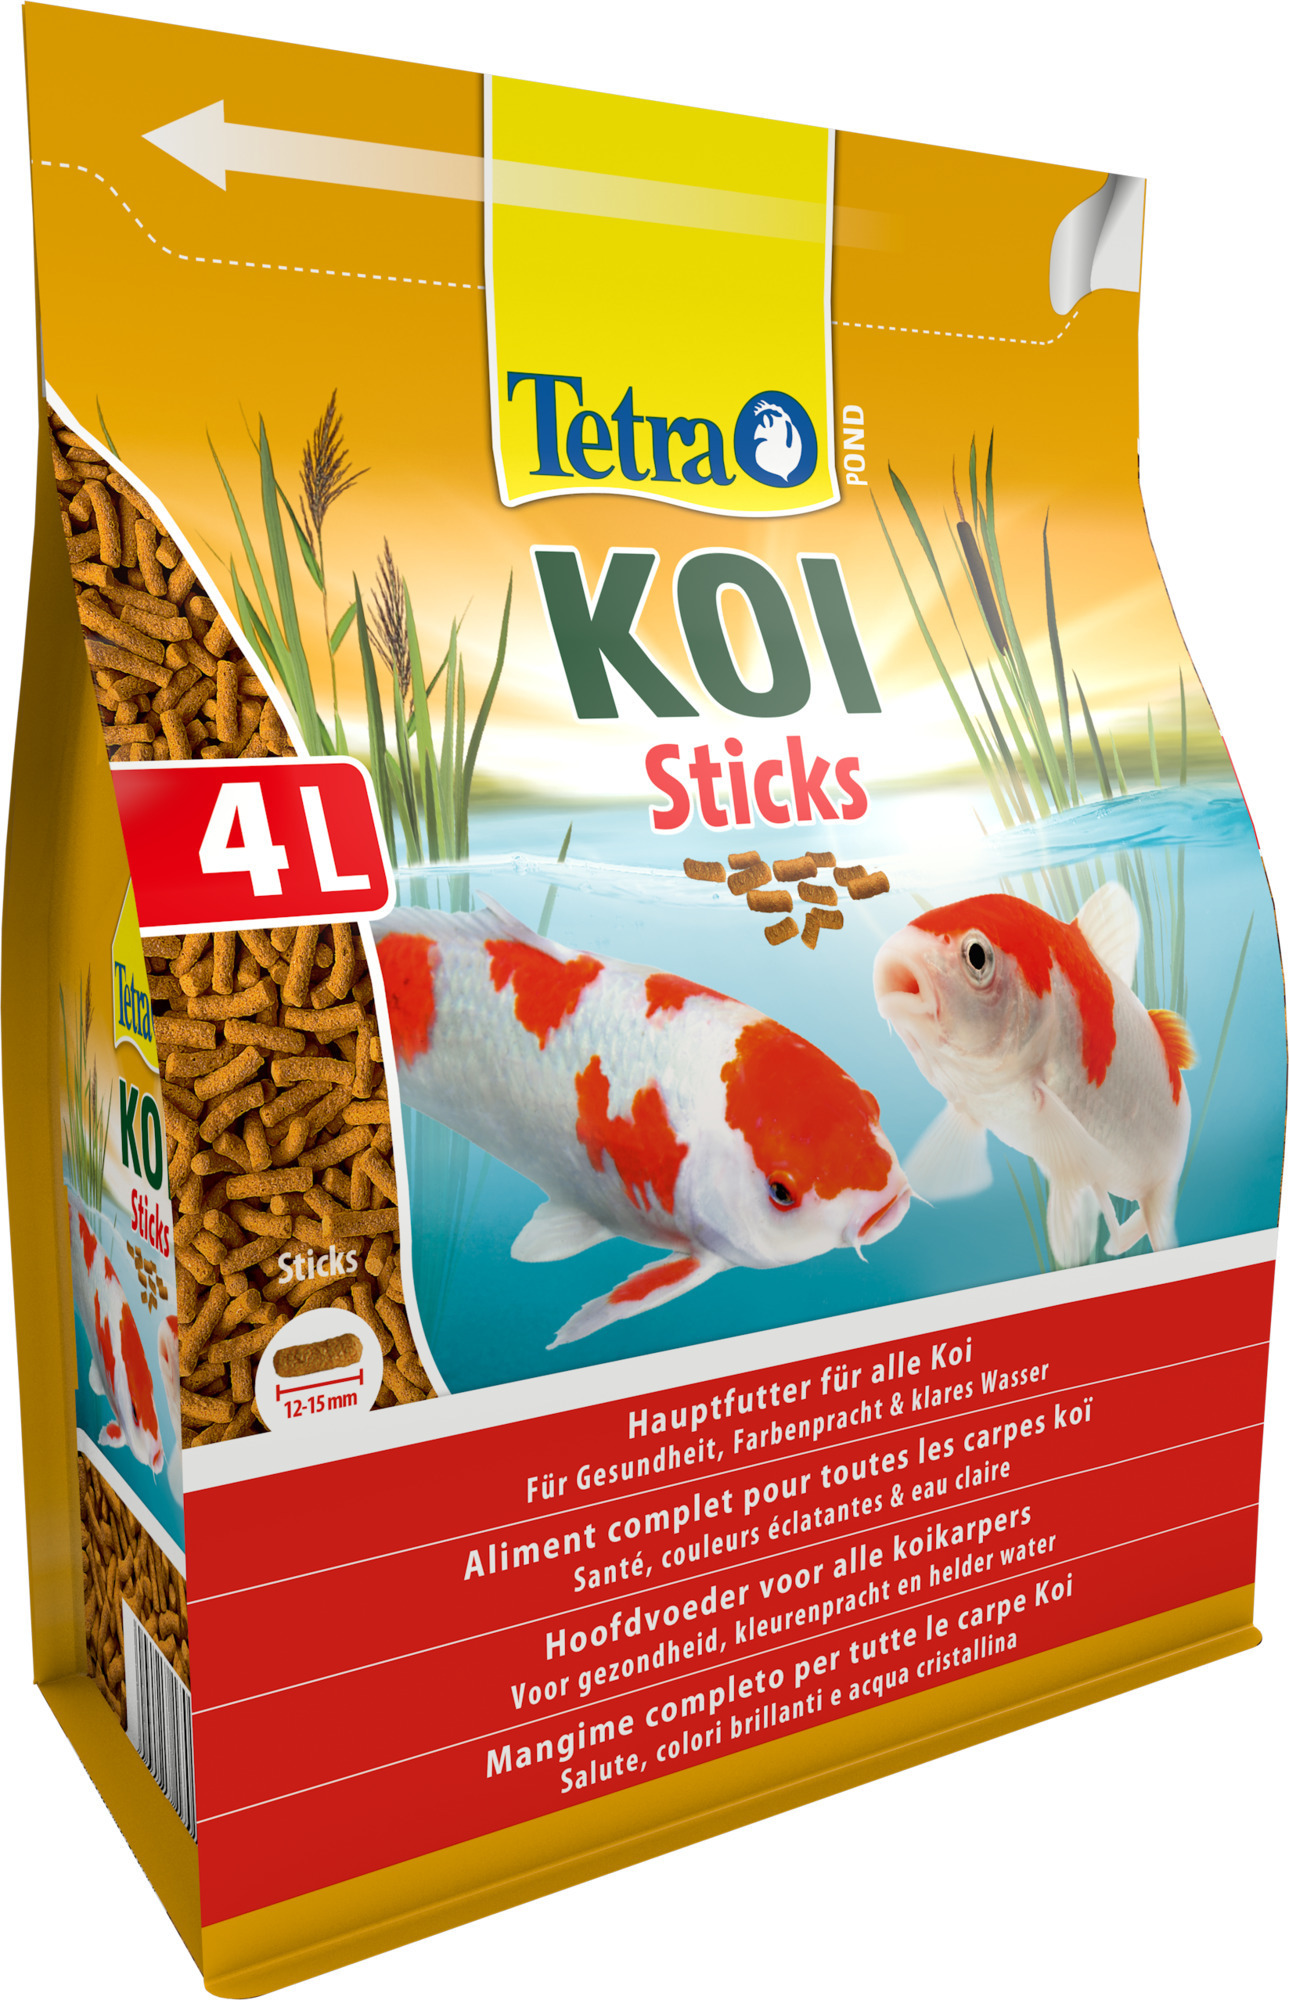 Tetra Pond Koi Sticks 4 Liter